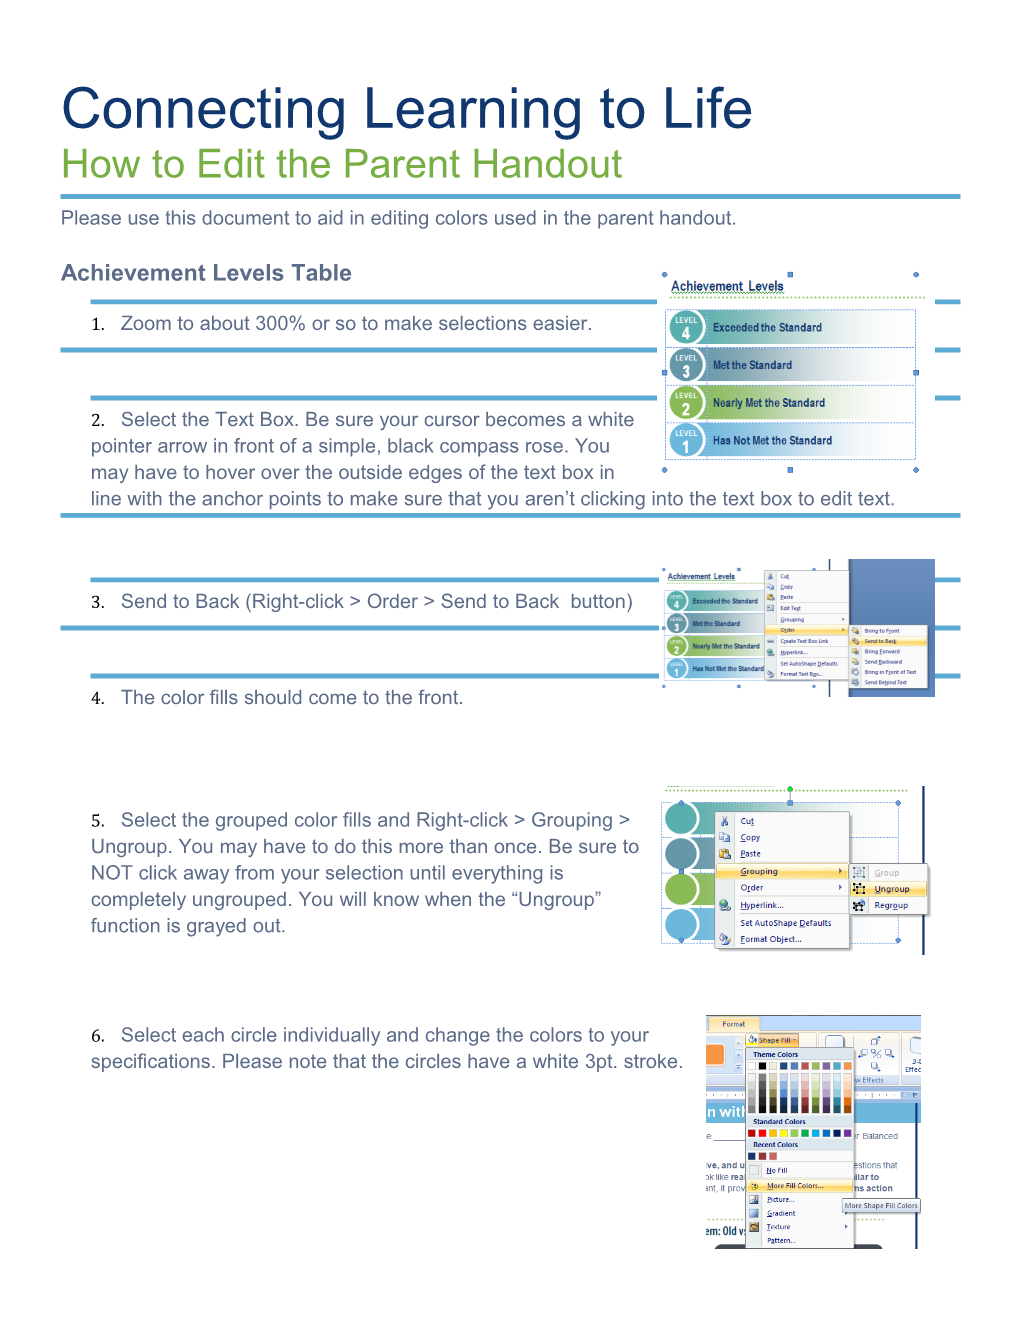 How to Edit the Parent Handout